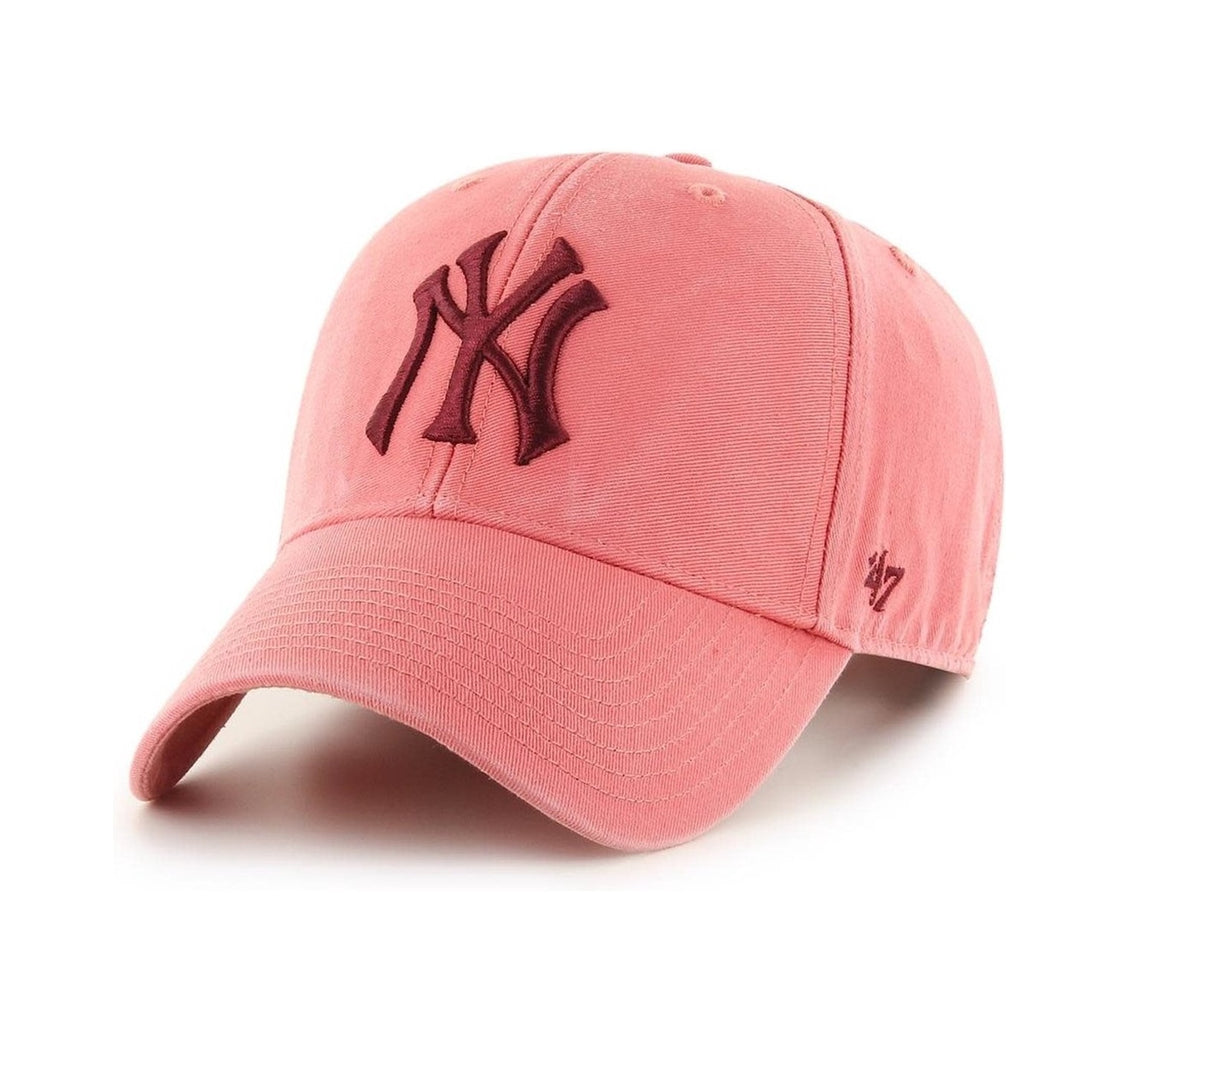 Baseball Cap - Adjustable MVP Cotton - New York Yankees - Verstelbaar